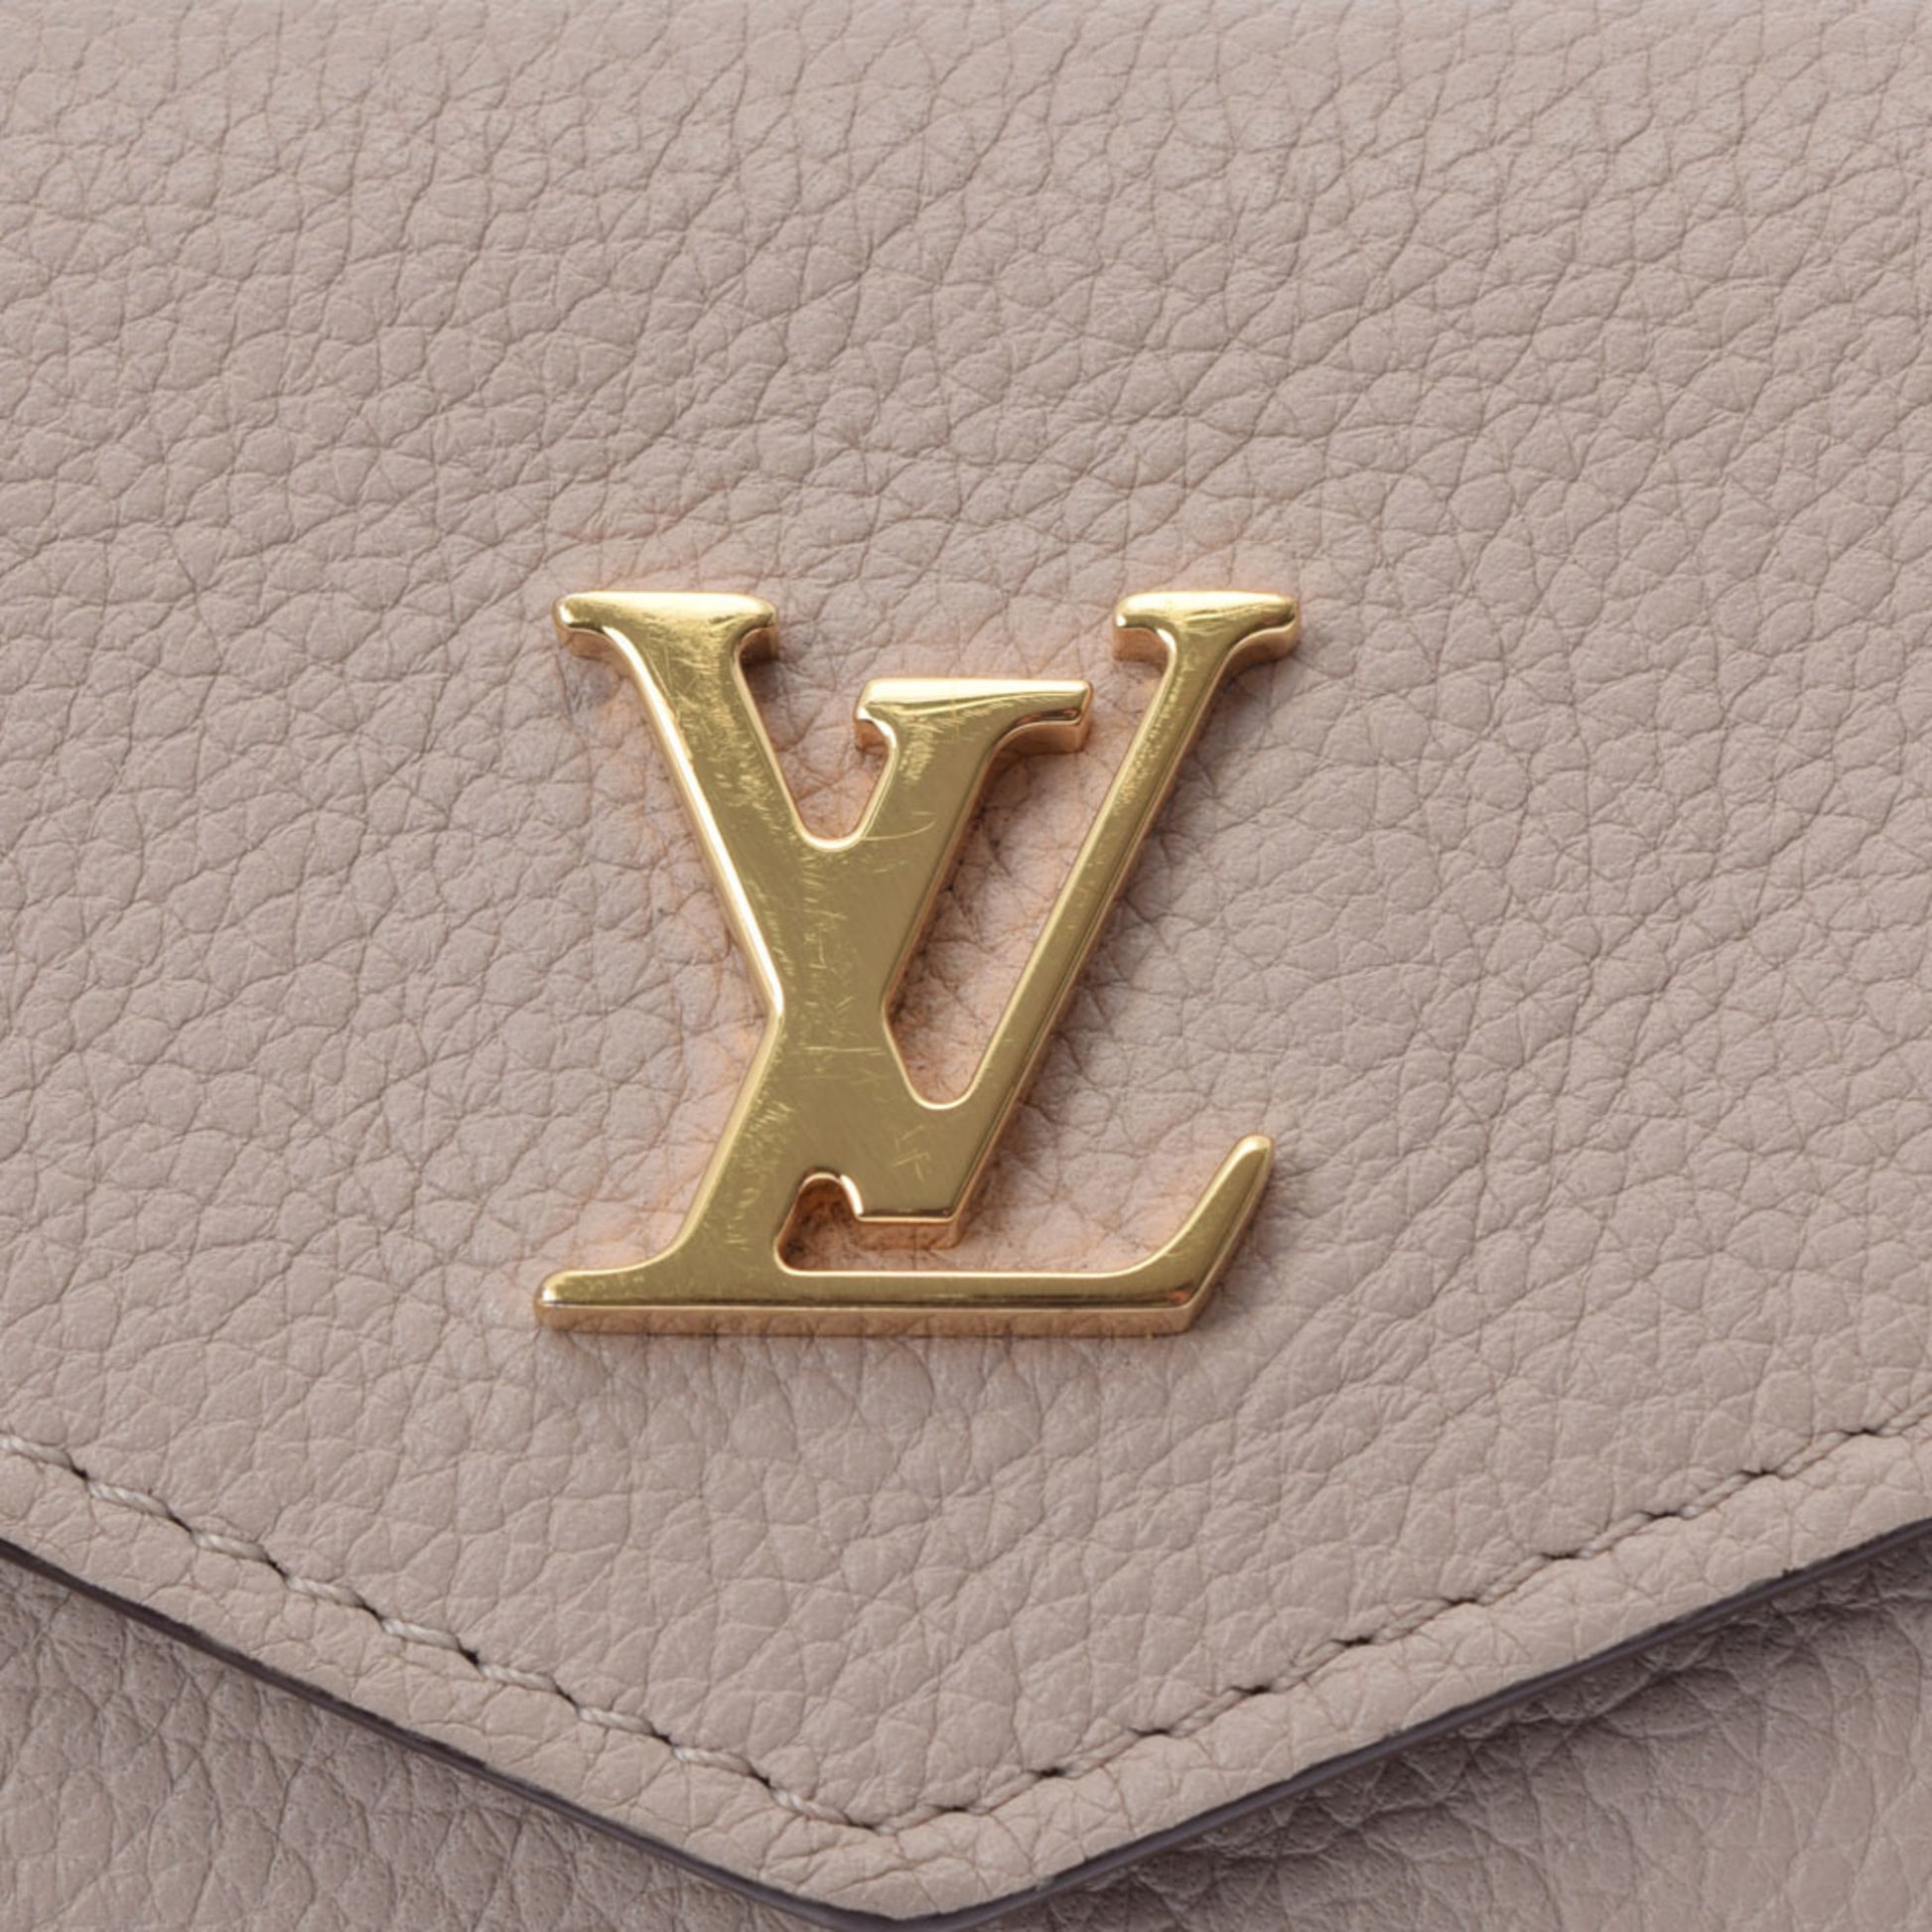 Louis Vuitton Portefeuille Lockmini Greige M69340 Calf Leather